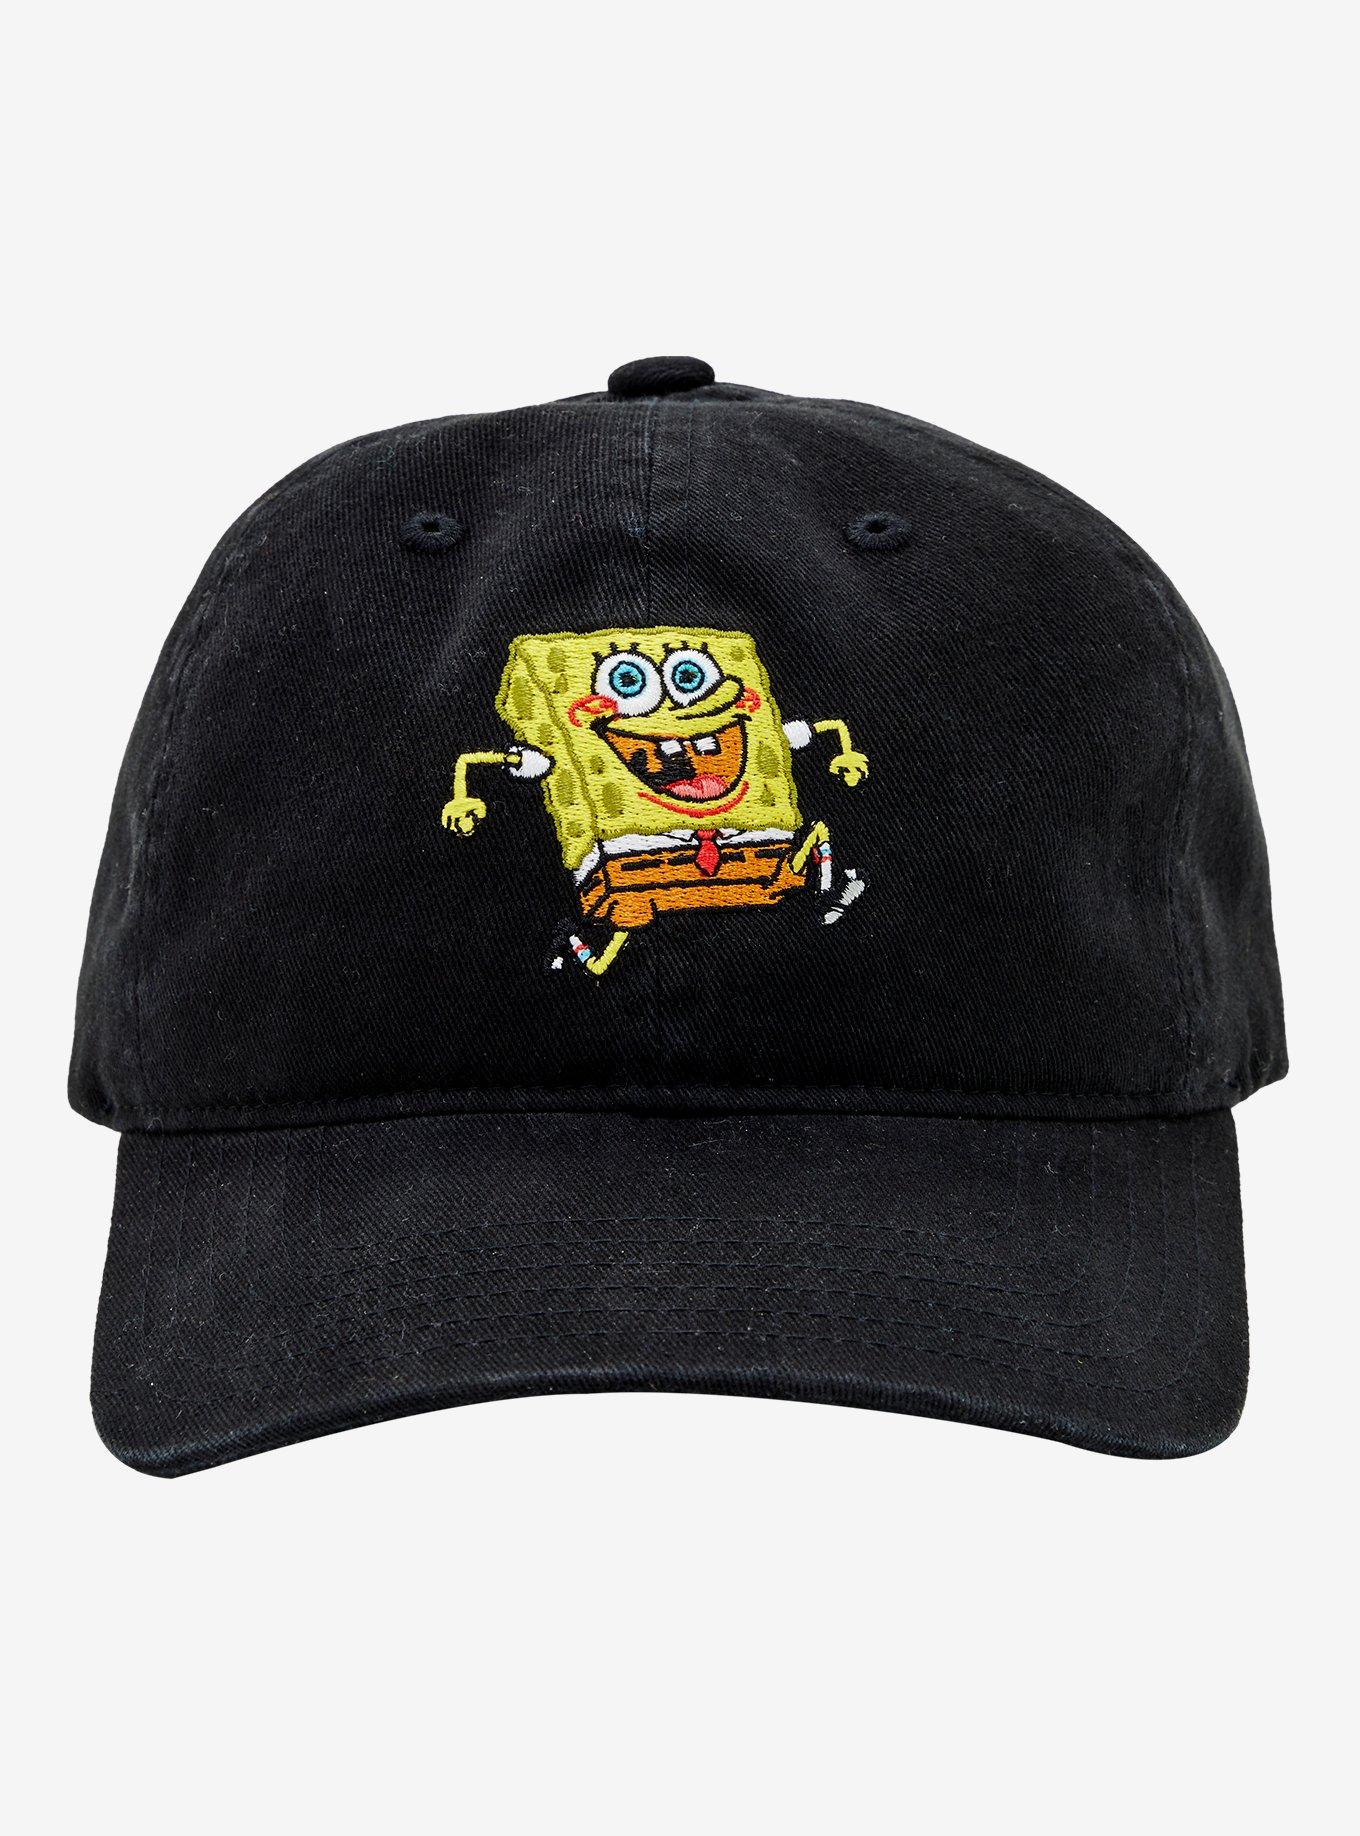 Spongebob SquarePants Running Portrait Ball Cap - BoxLunch Exclusive